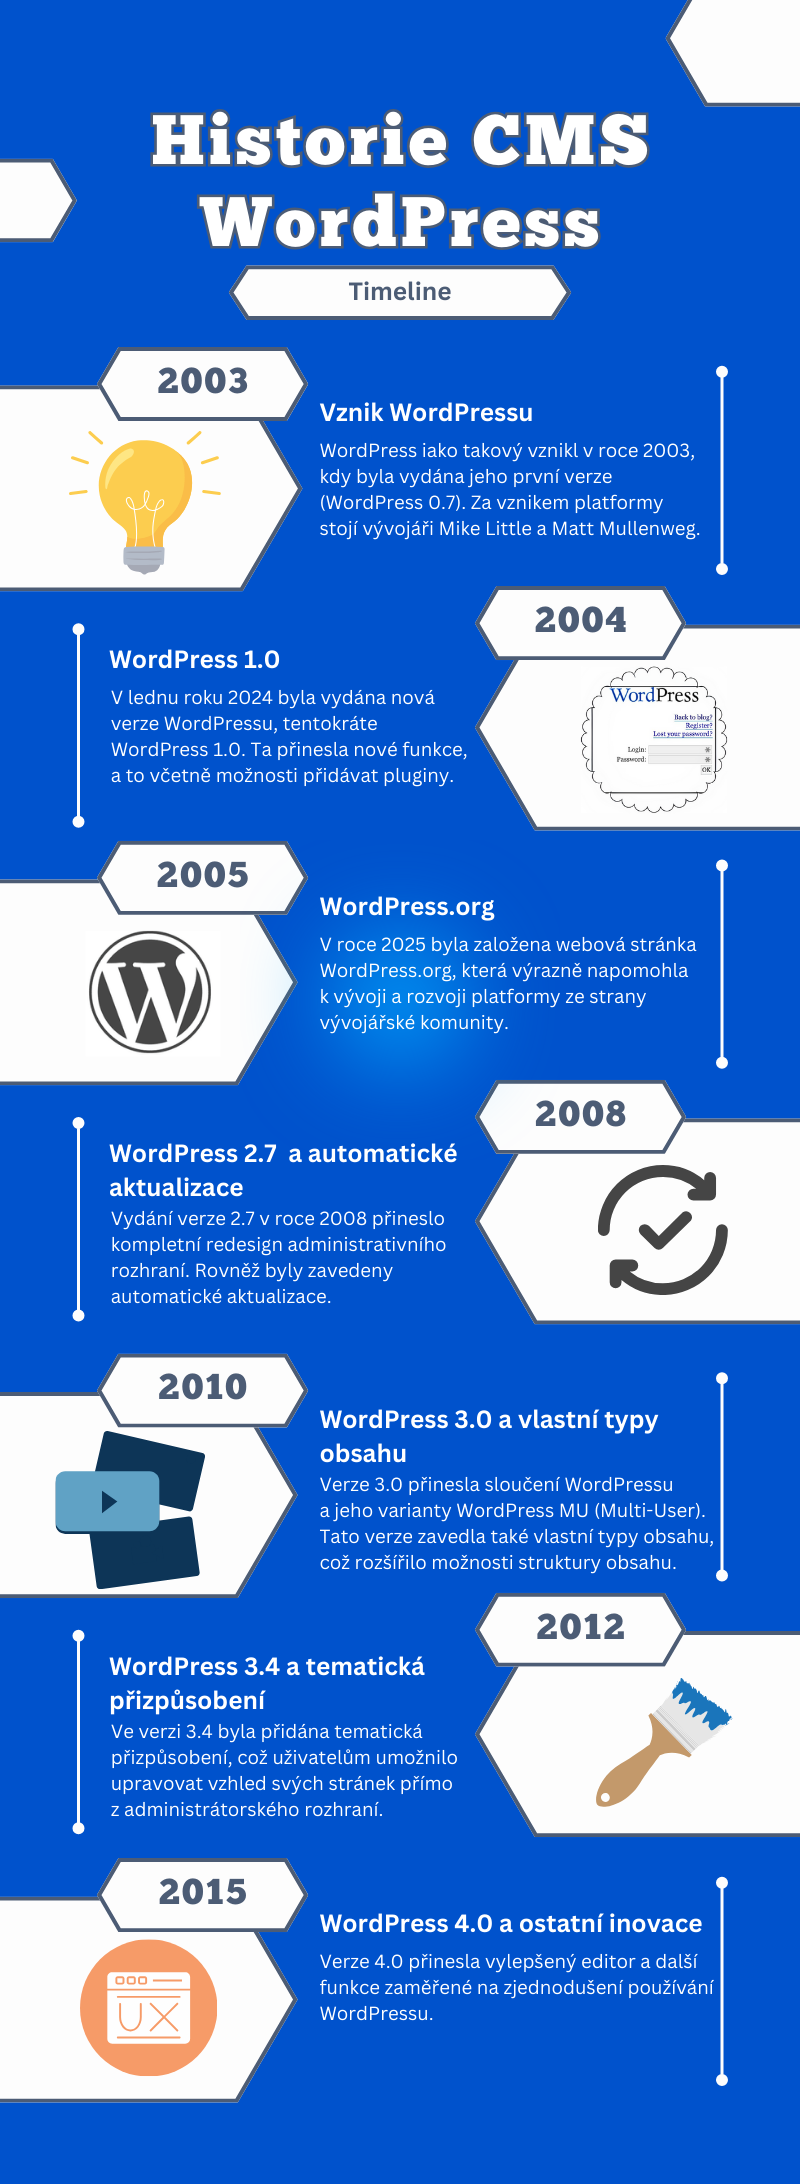 Historie a vývoj WordPressu - infografika